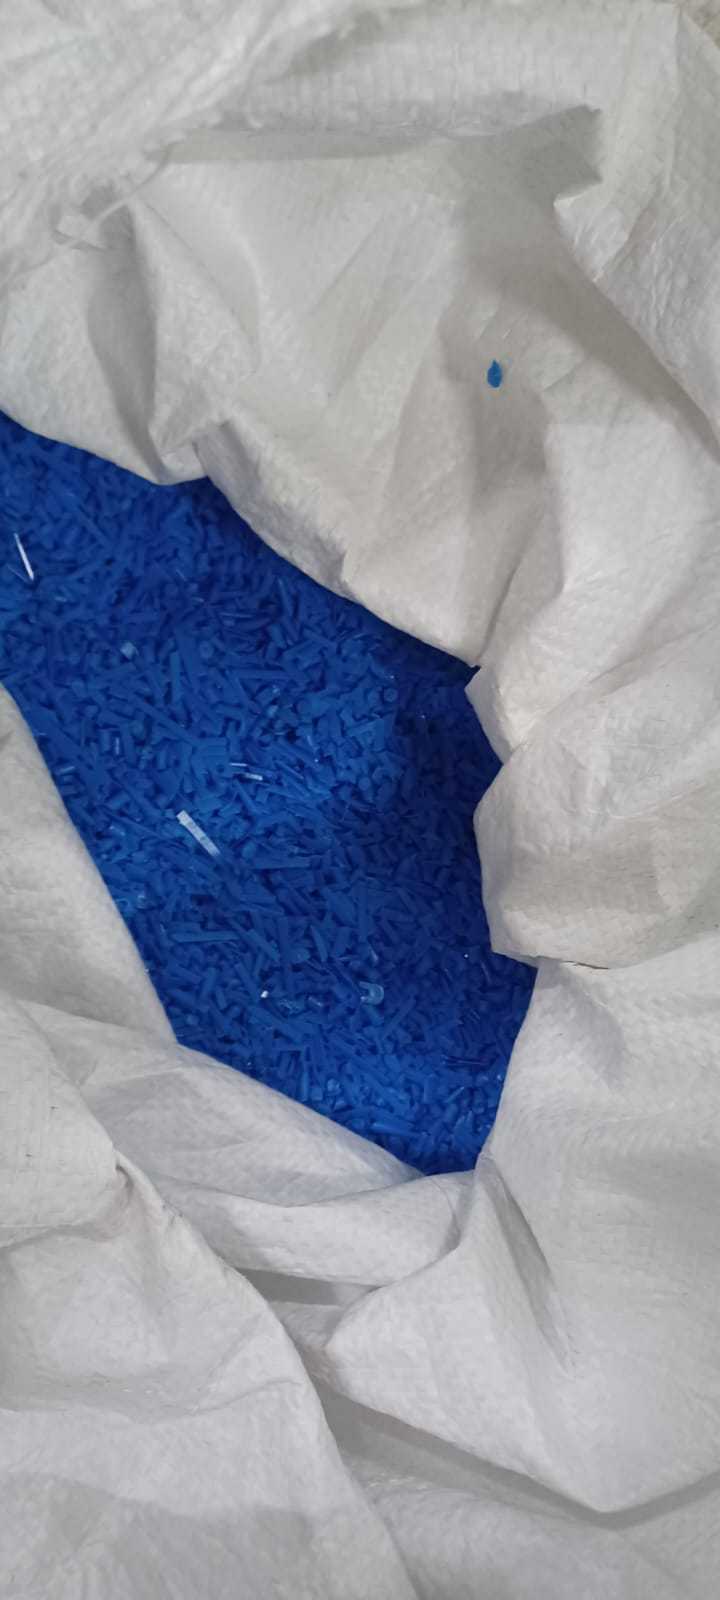 POM POM Grinding Injection Molding sayan gujarat india Plastic4trade